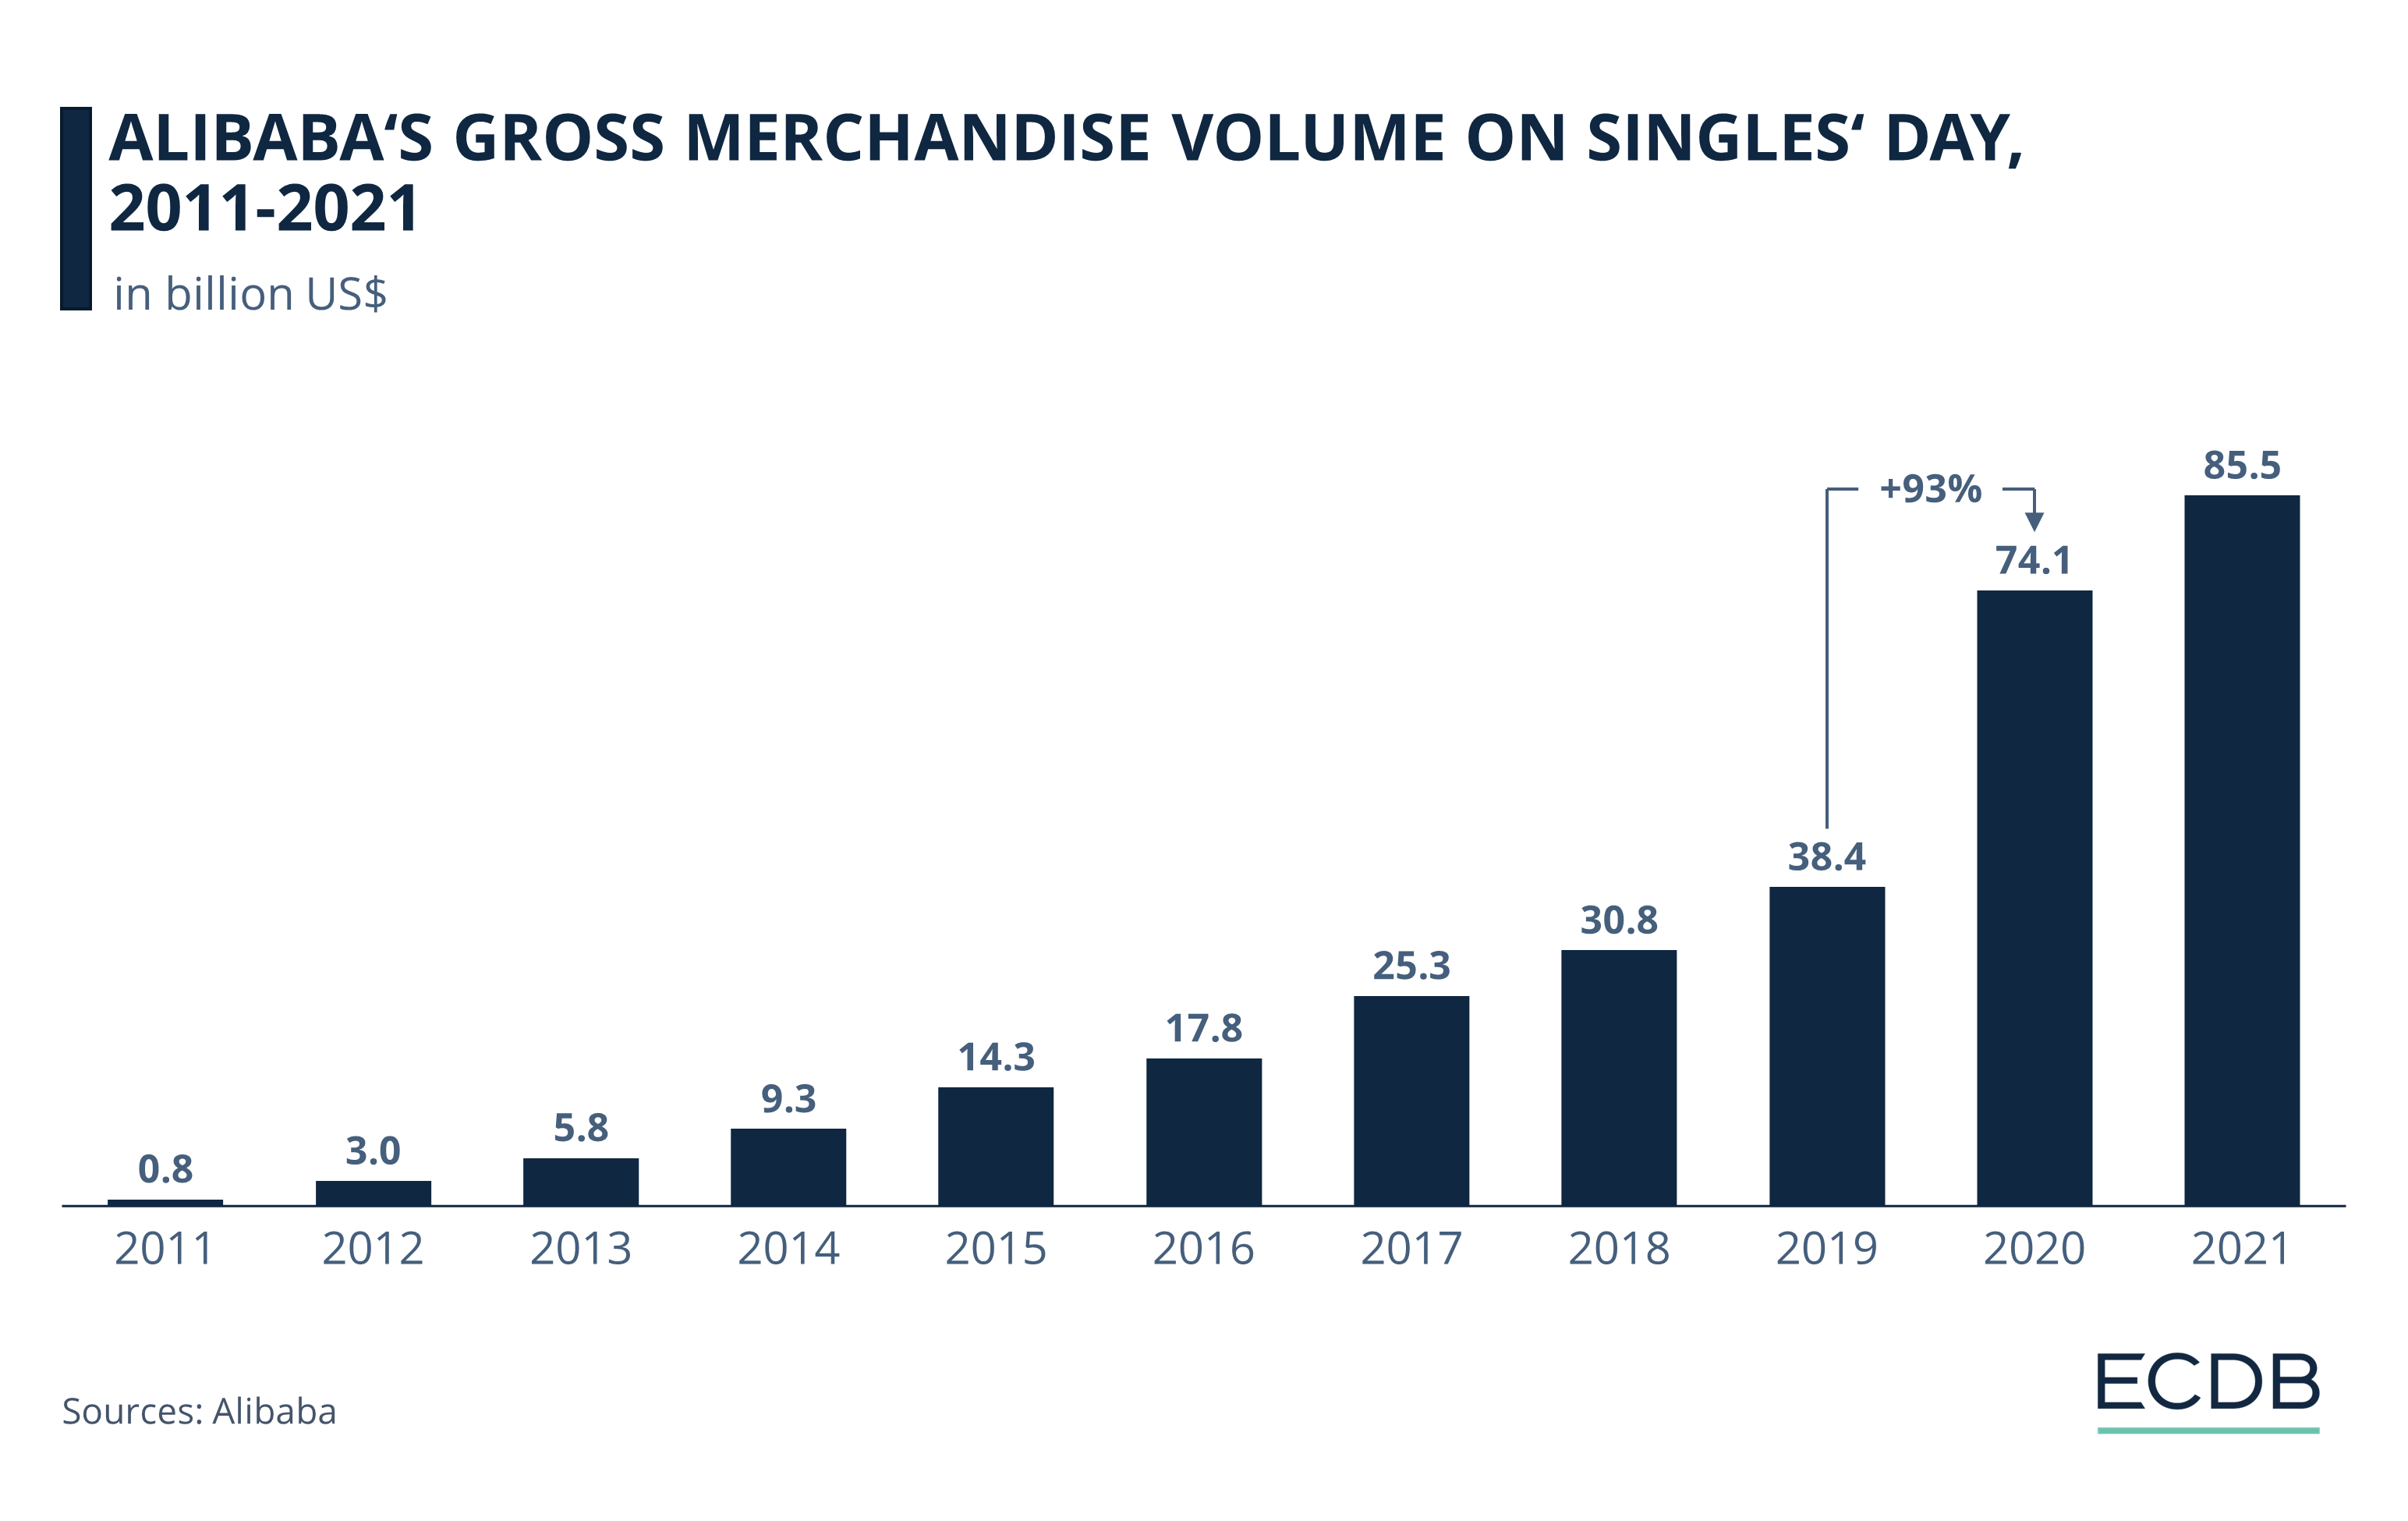 Alibaba's Gross Merchandise Volume on Singles' Day, 2011-2021